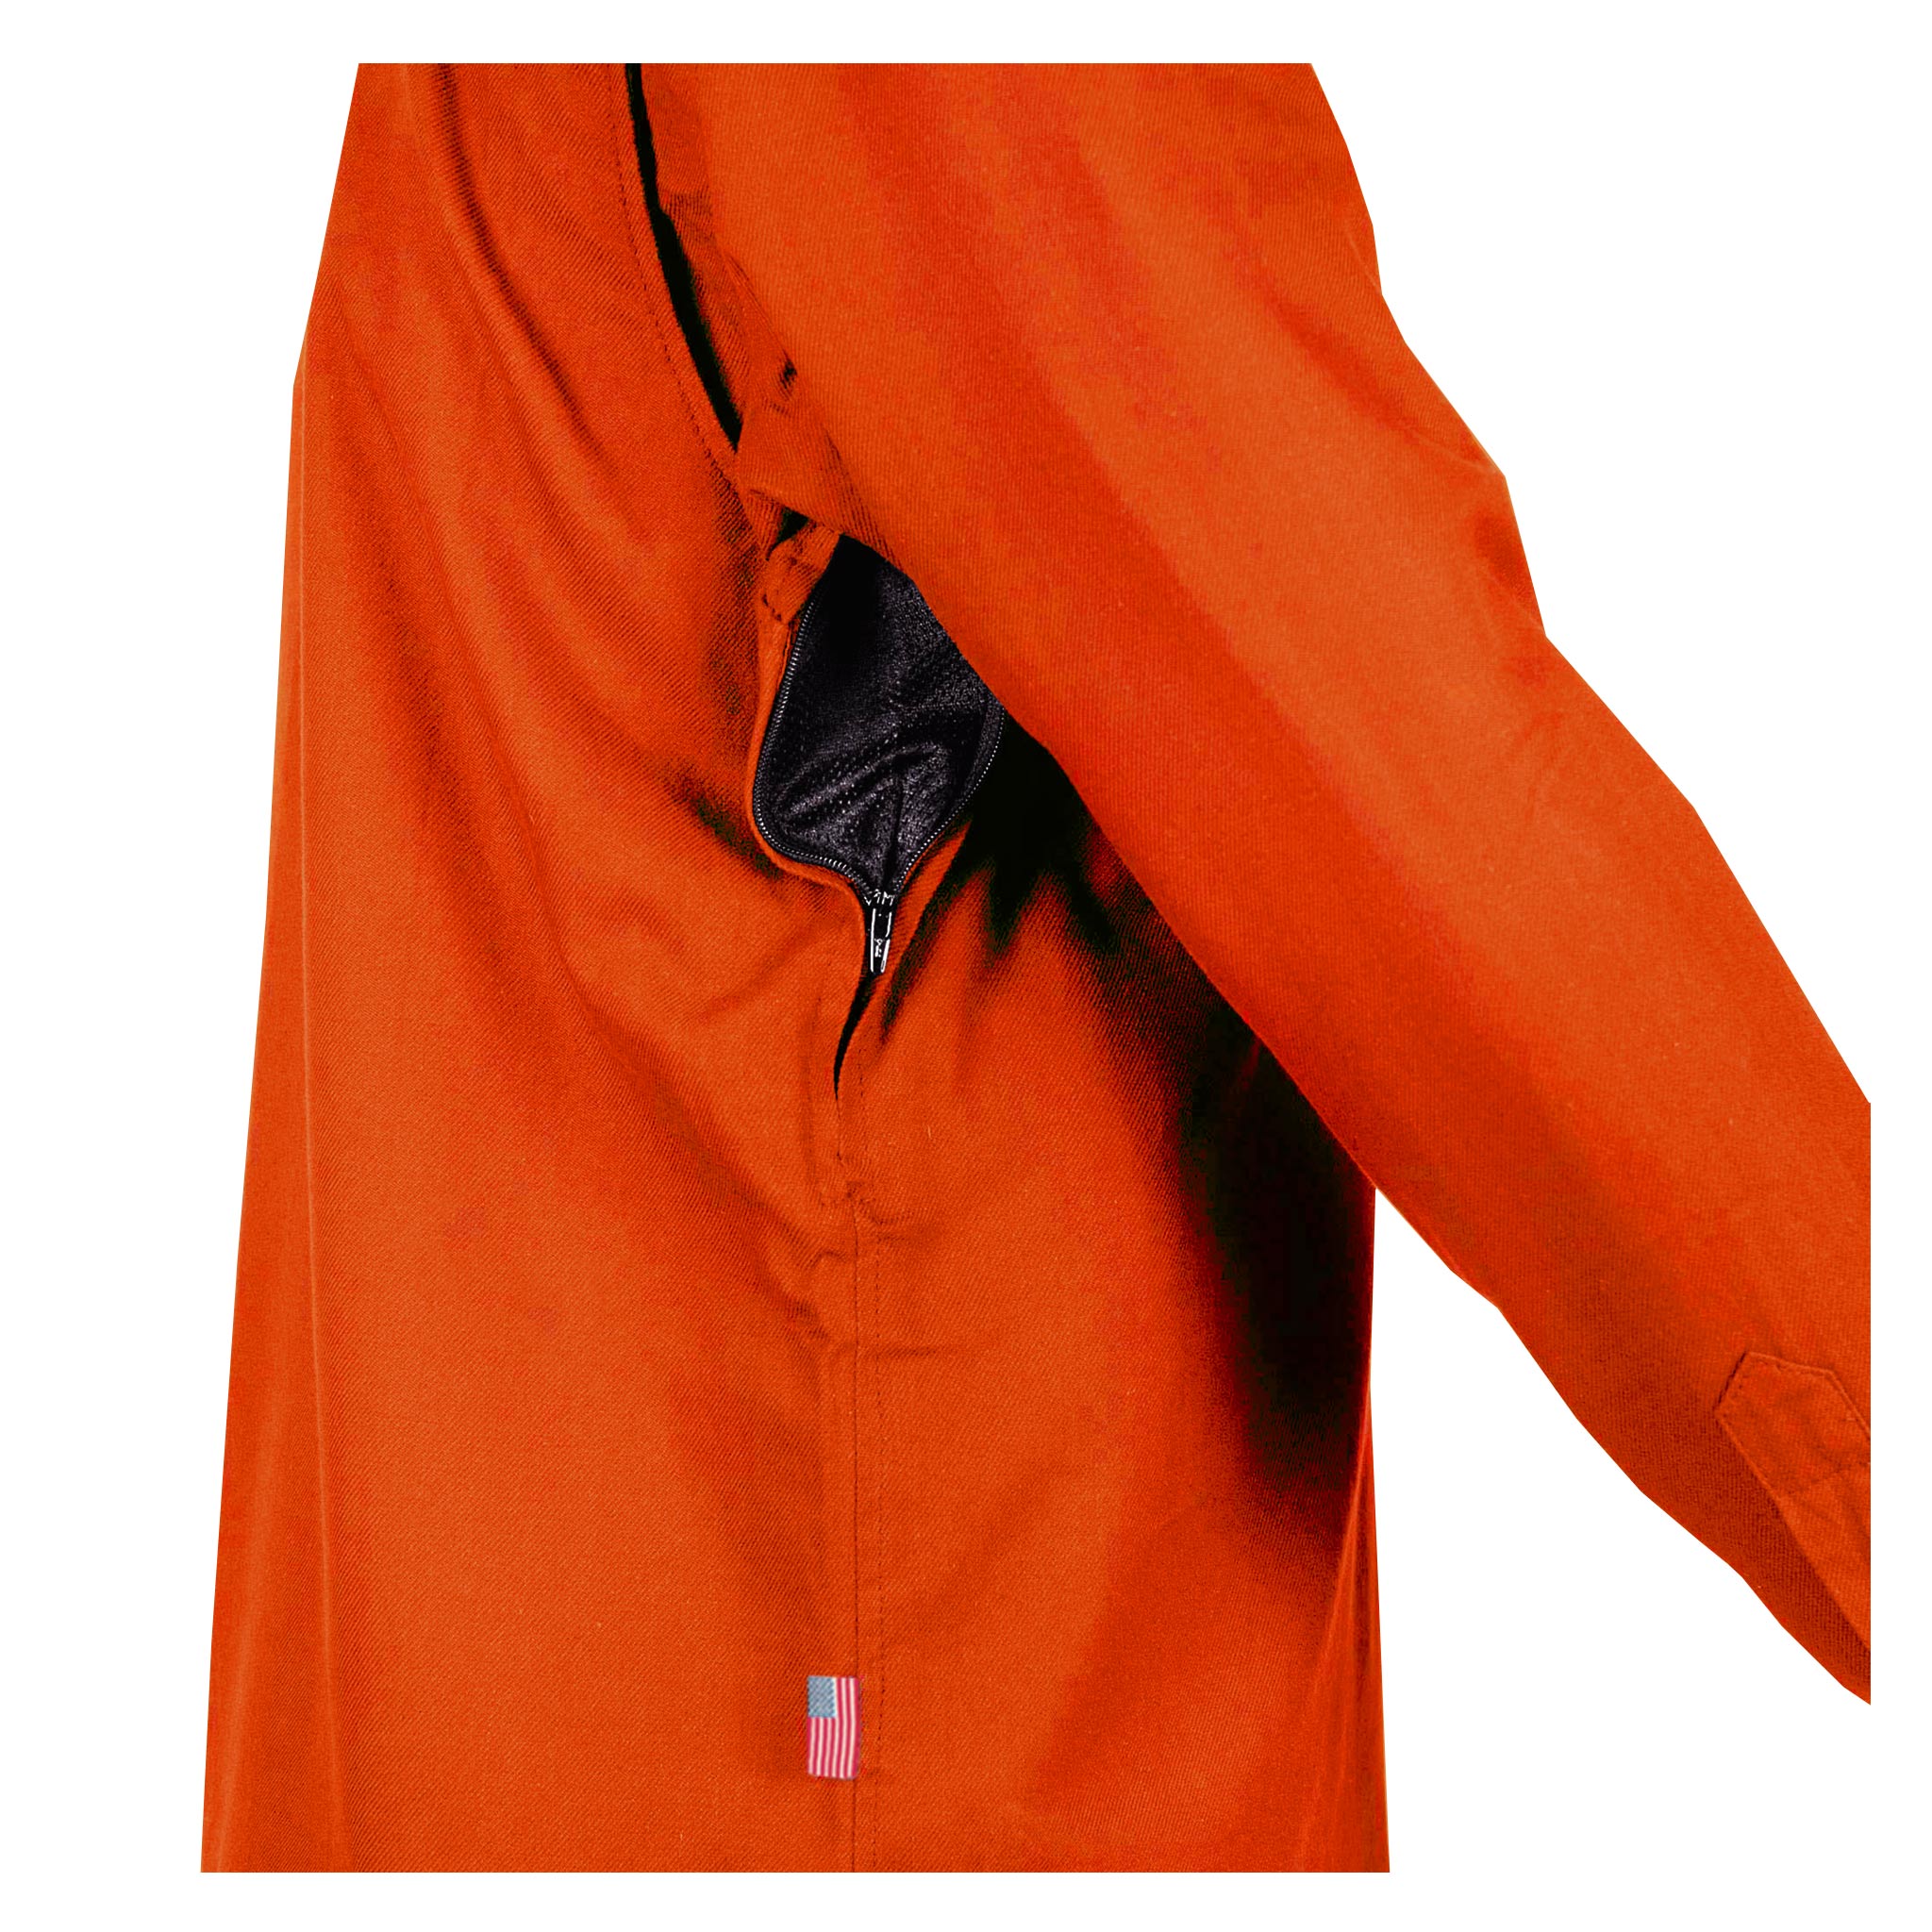 Men's-Flannel-Shirt-Orange-Solid-with-Pocket-Under-Sleeve